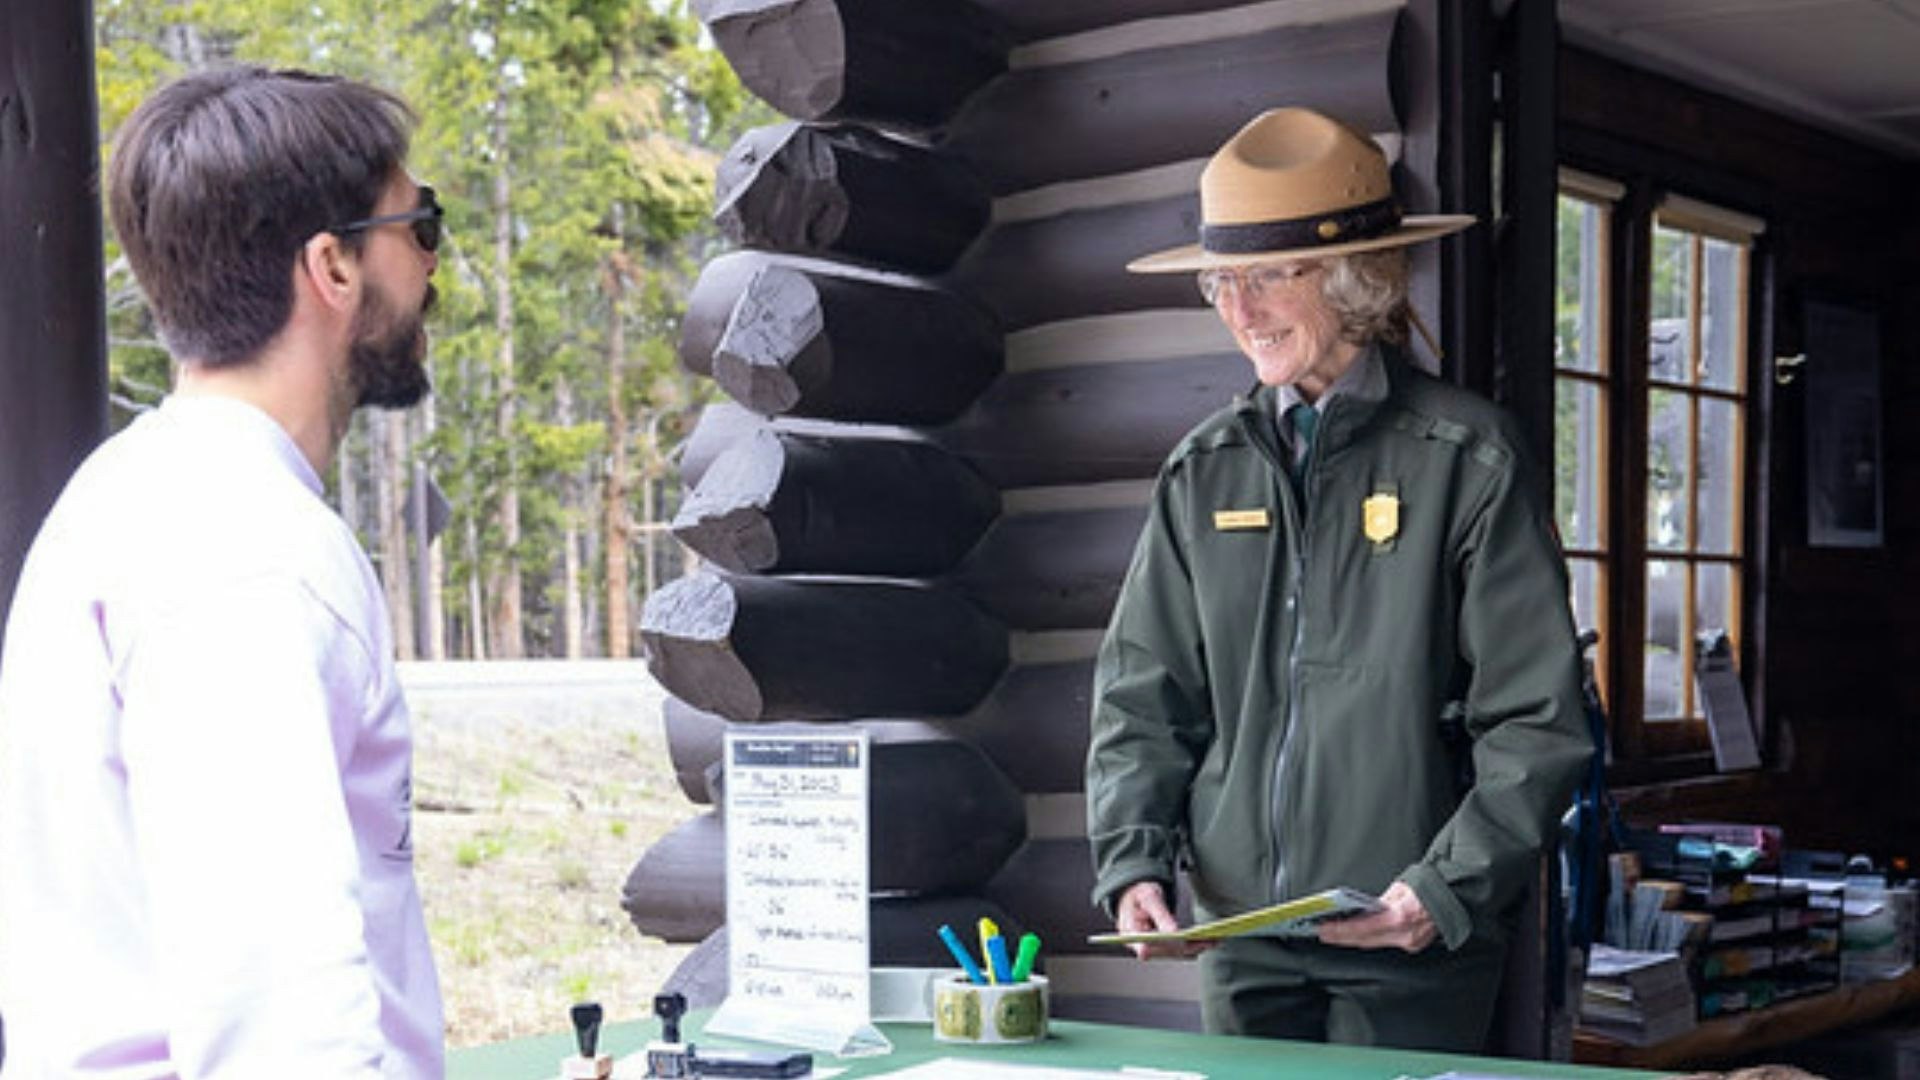 A Yellowstone National Park ranger recruits a potential park employee.